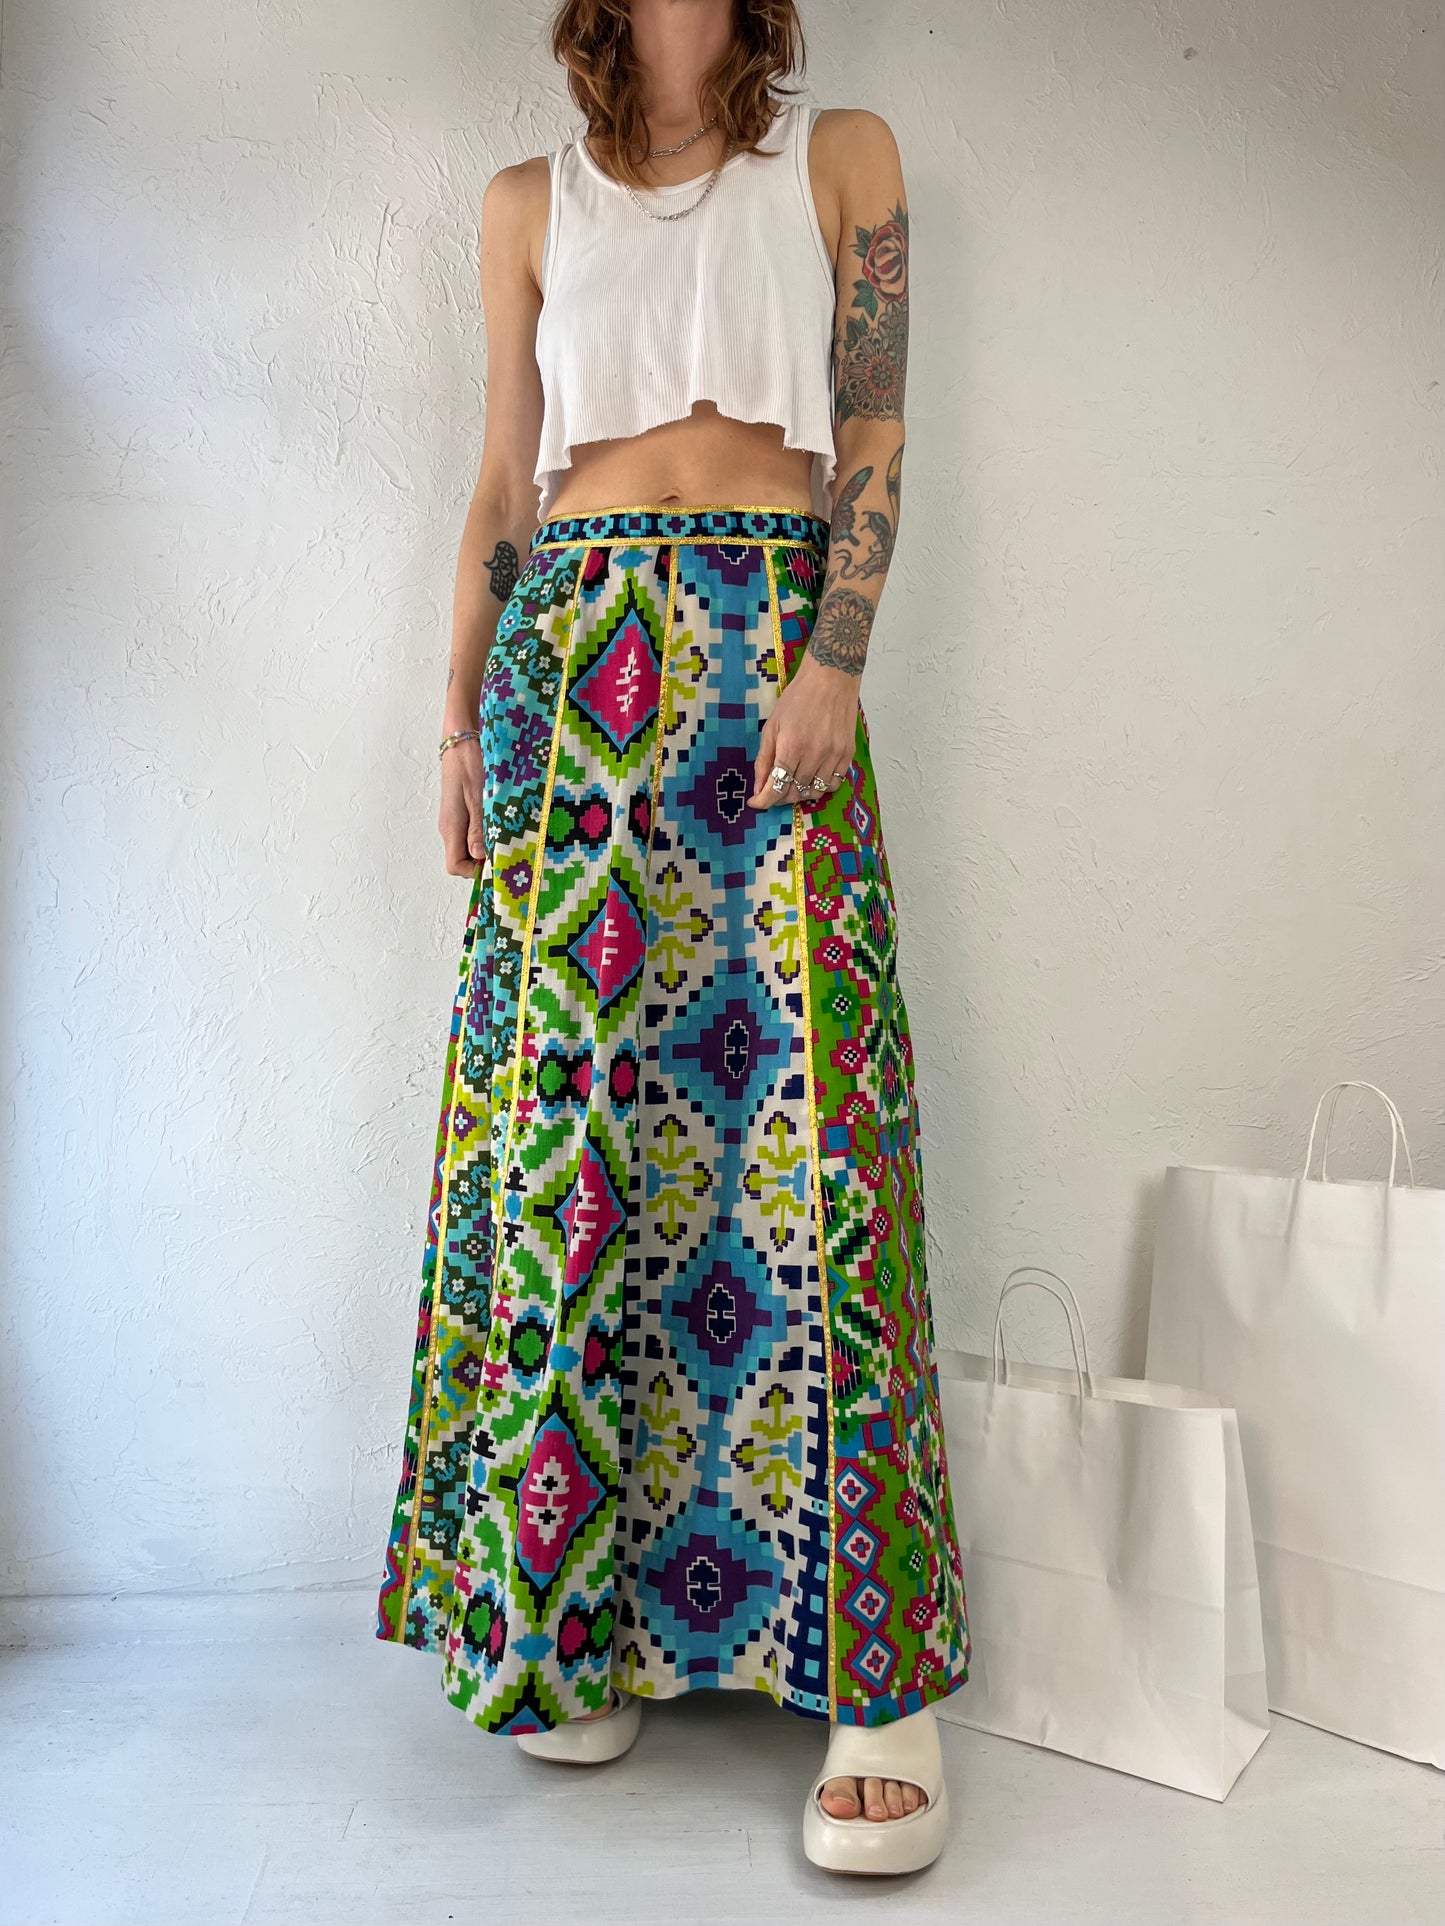 70s 'Star of Siam' Wool Abstract Maxi Skirt / Small - Medium